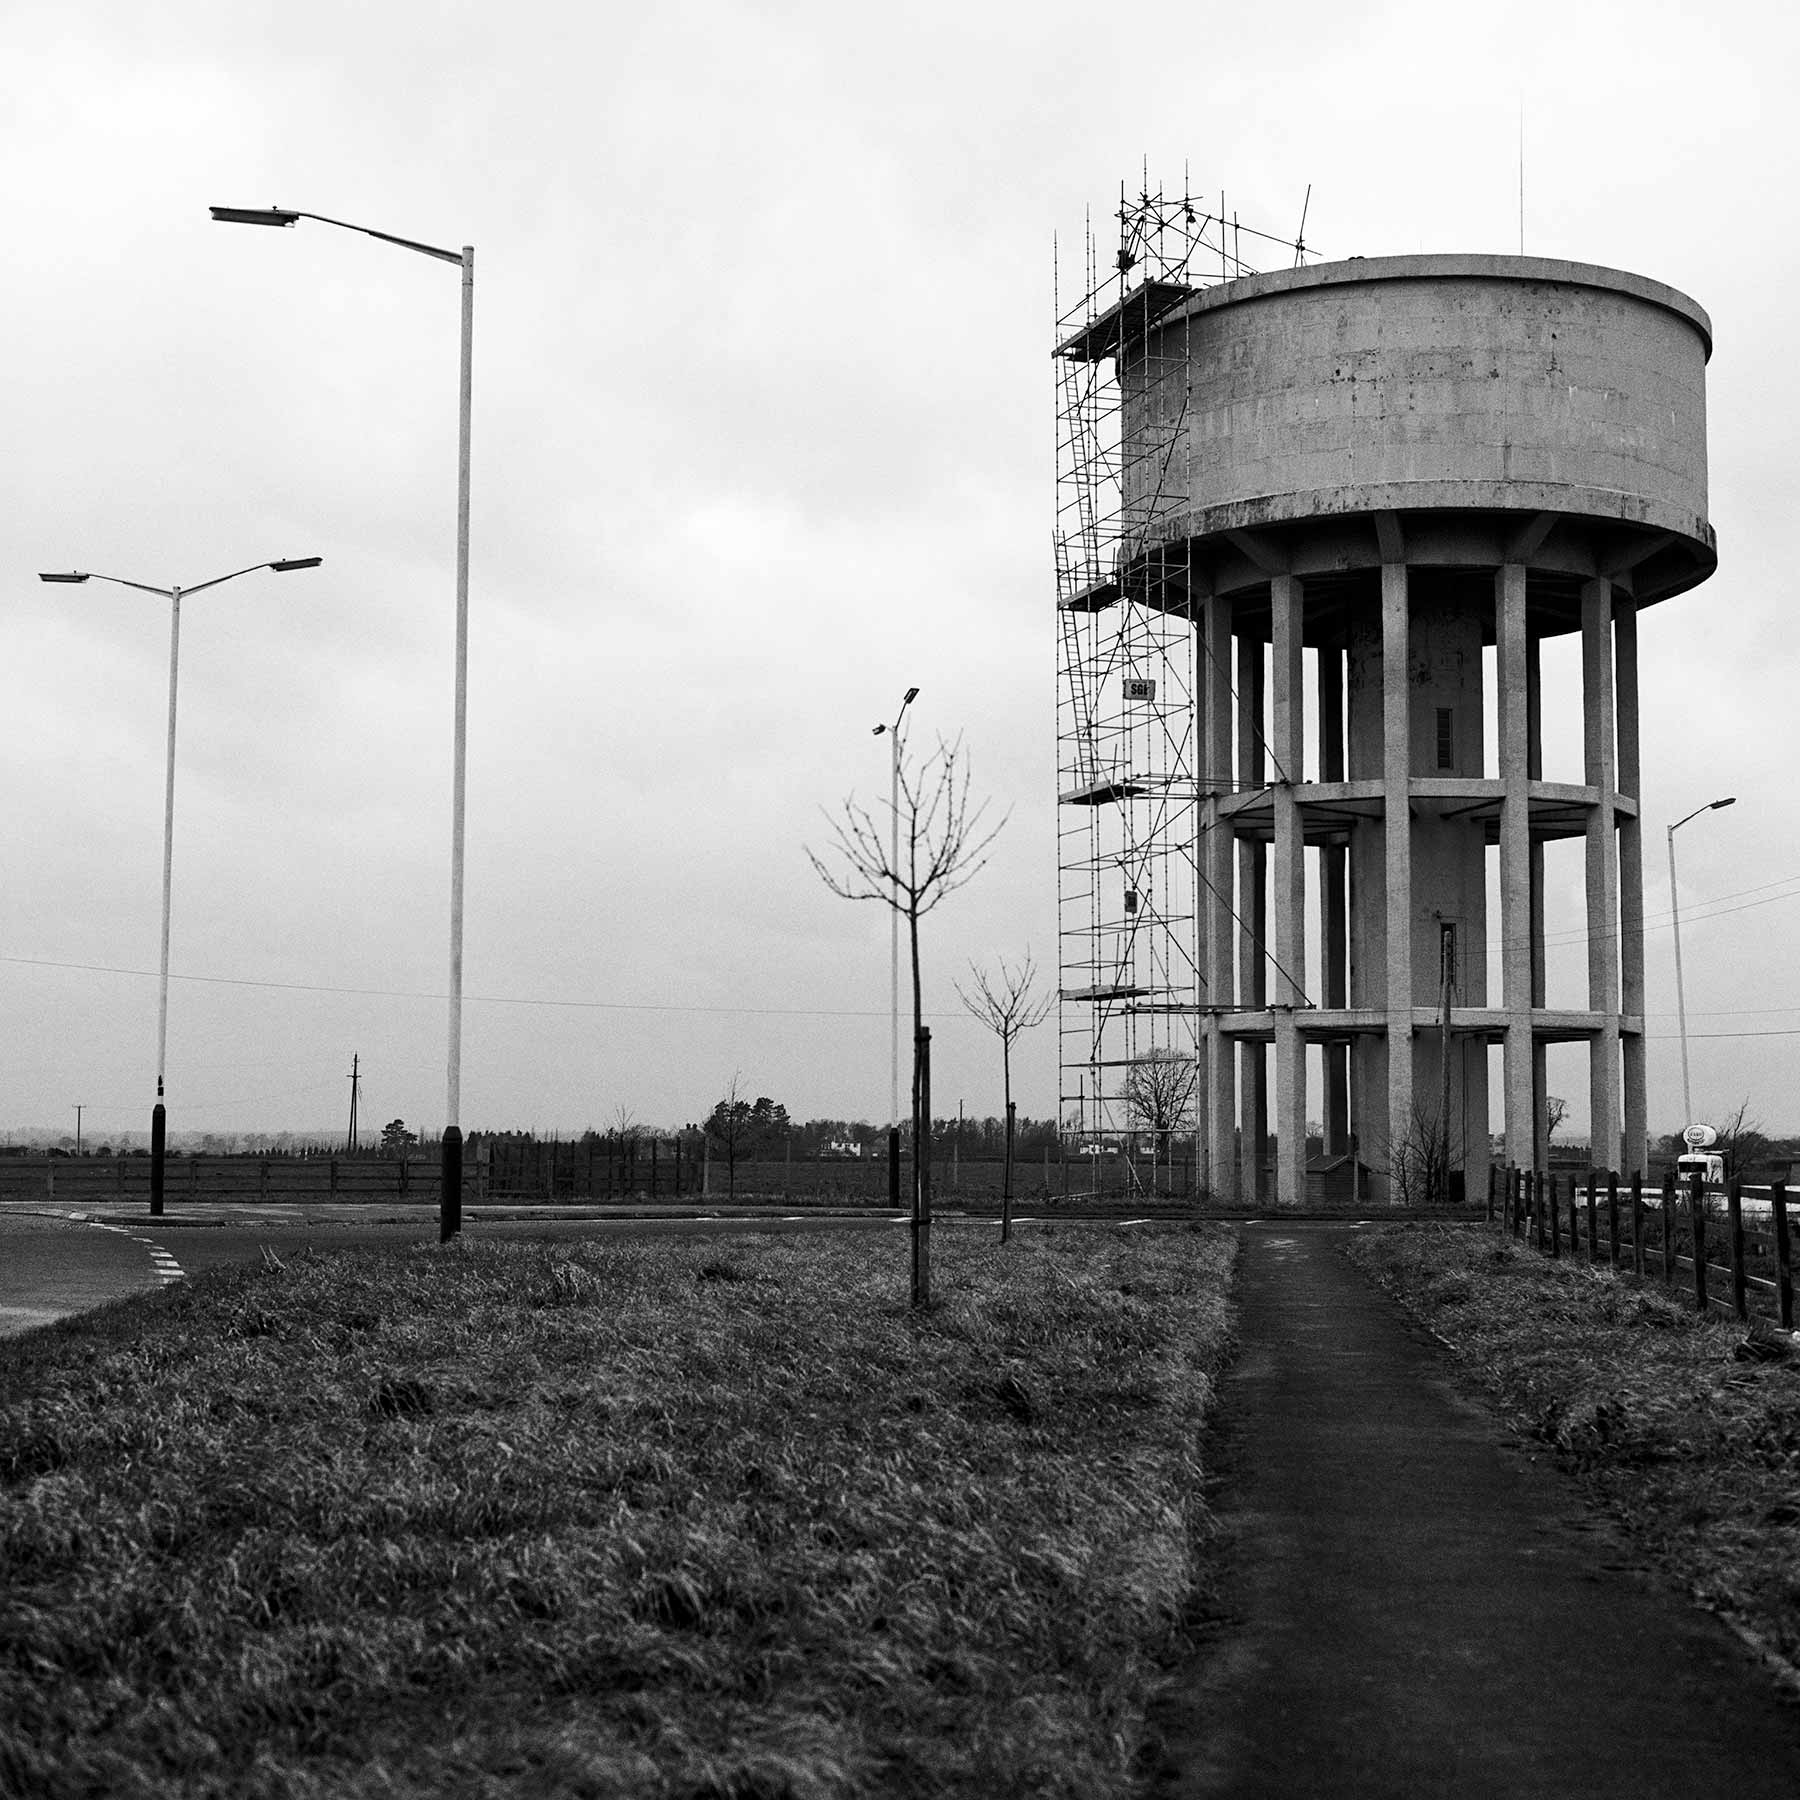 Water tower and petrol station – Malmesbury, England, 1980